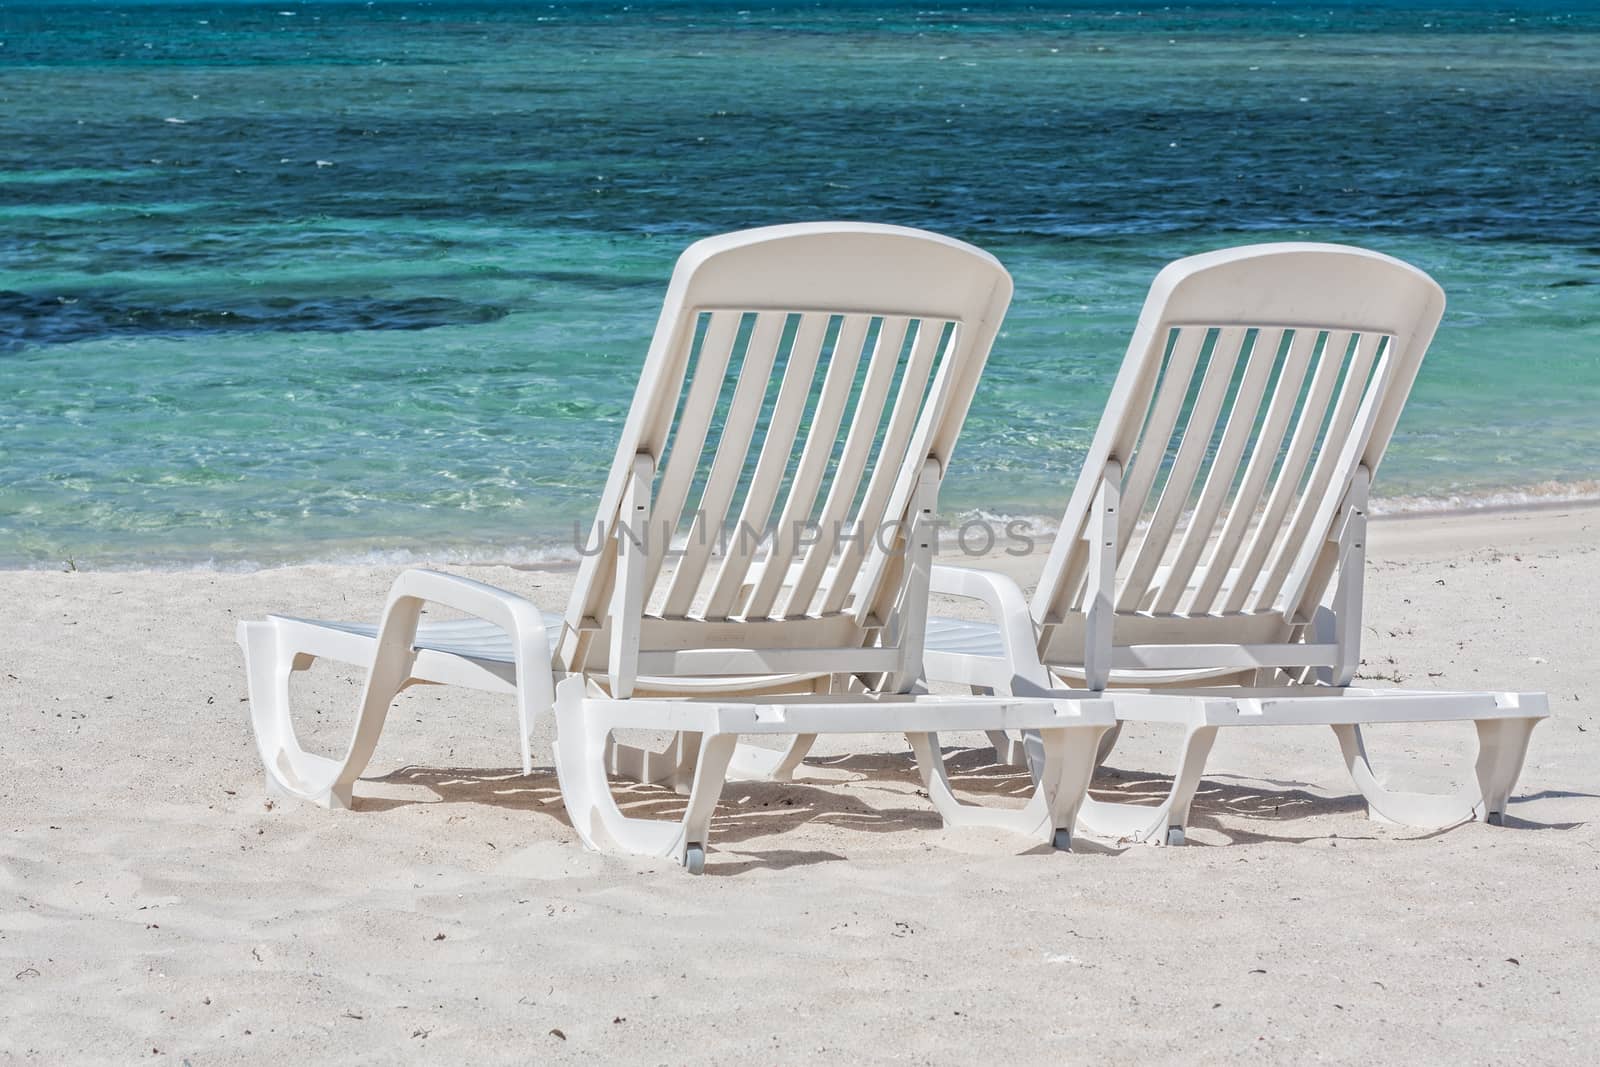 Sun loungers facing the Caribbean Sea by Brigida_Soriano